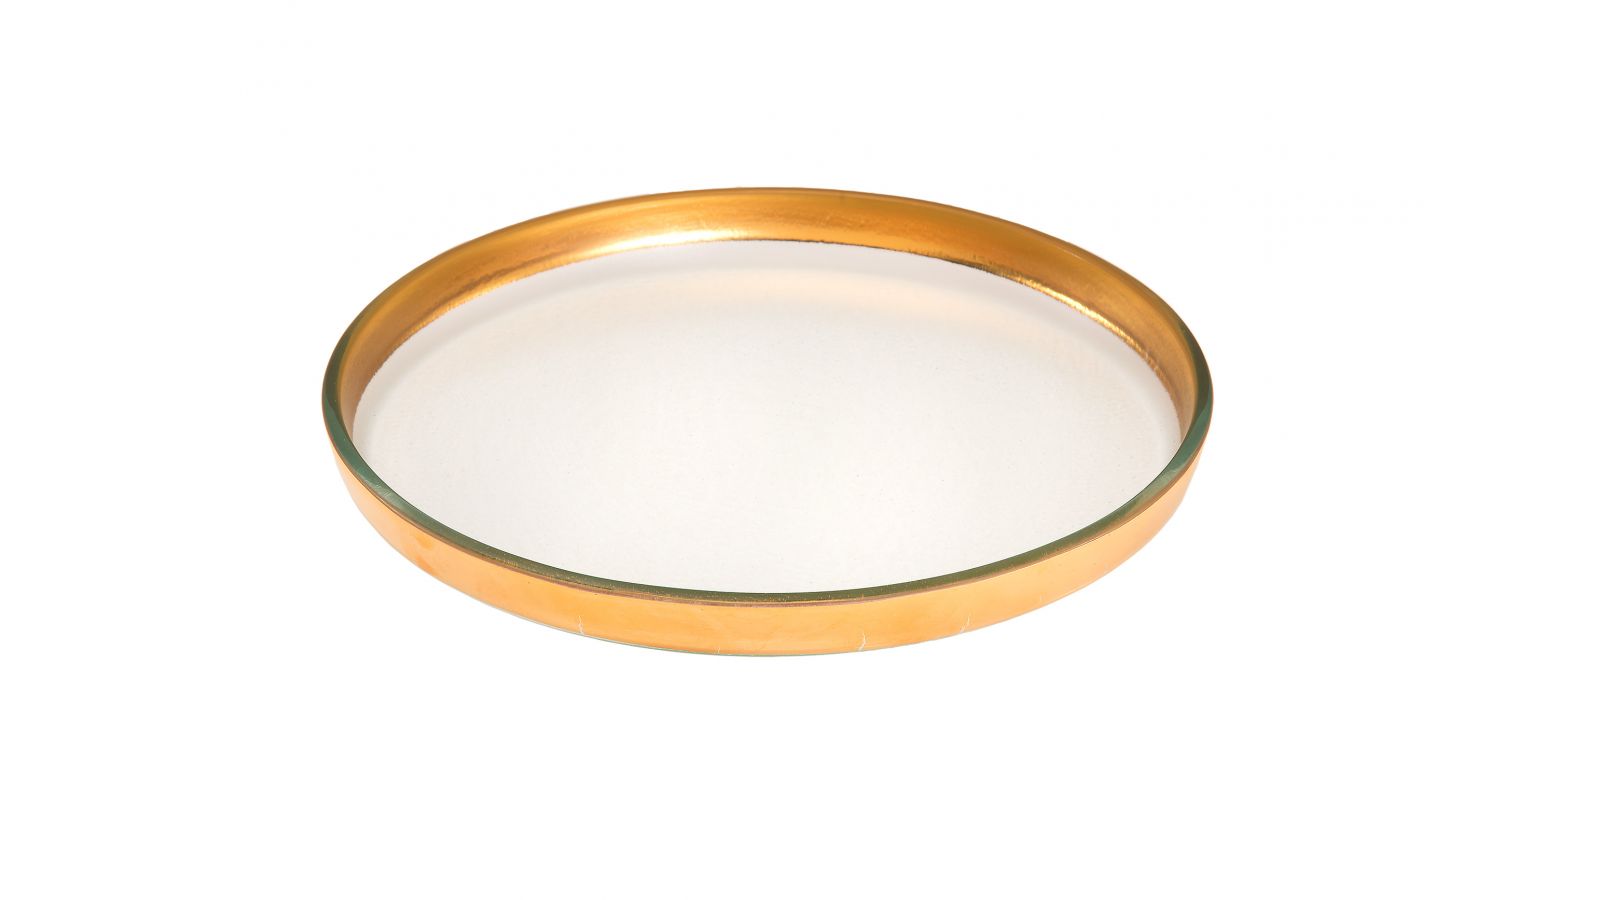 Mod Medium Sized Round Plate